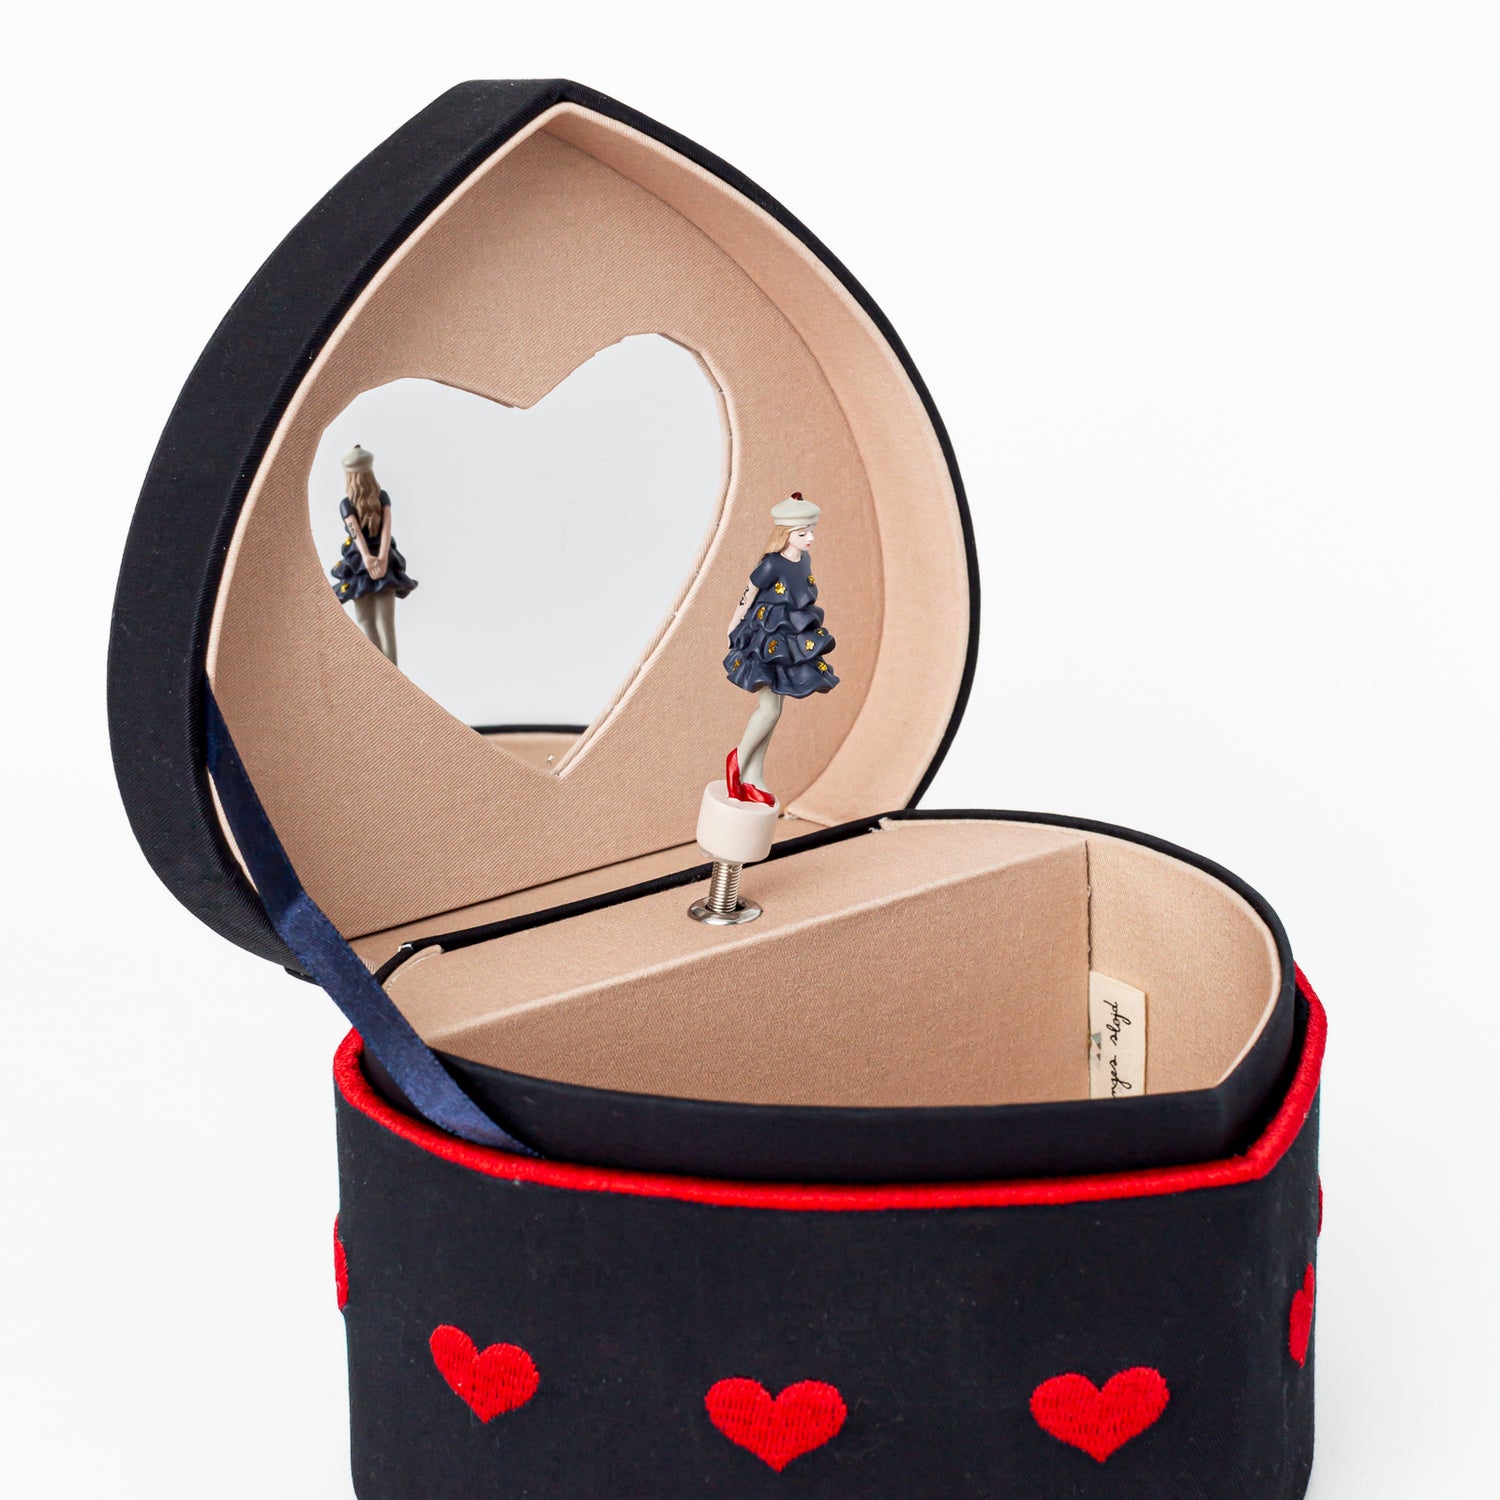 Konges Sløjd Musical Heart-Shaped Treasure Box